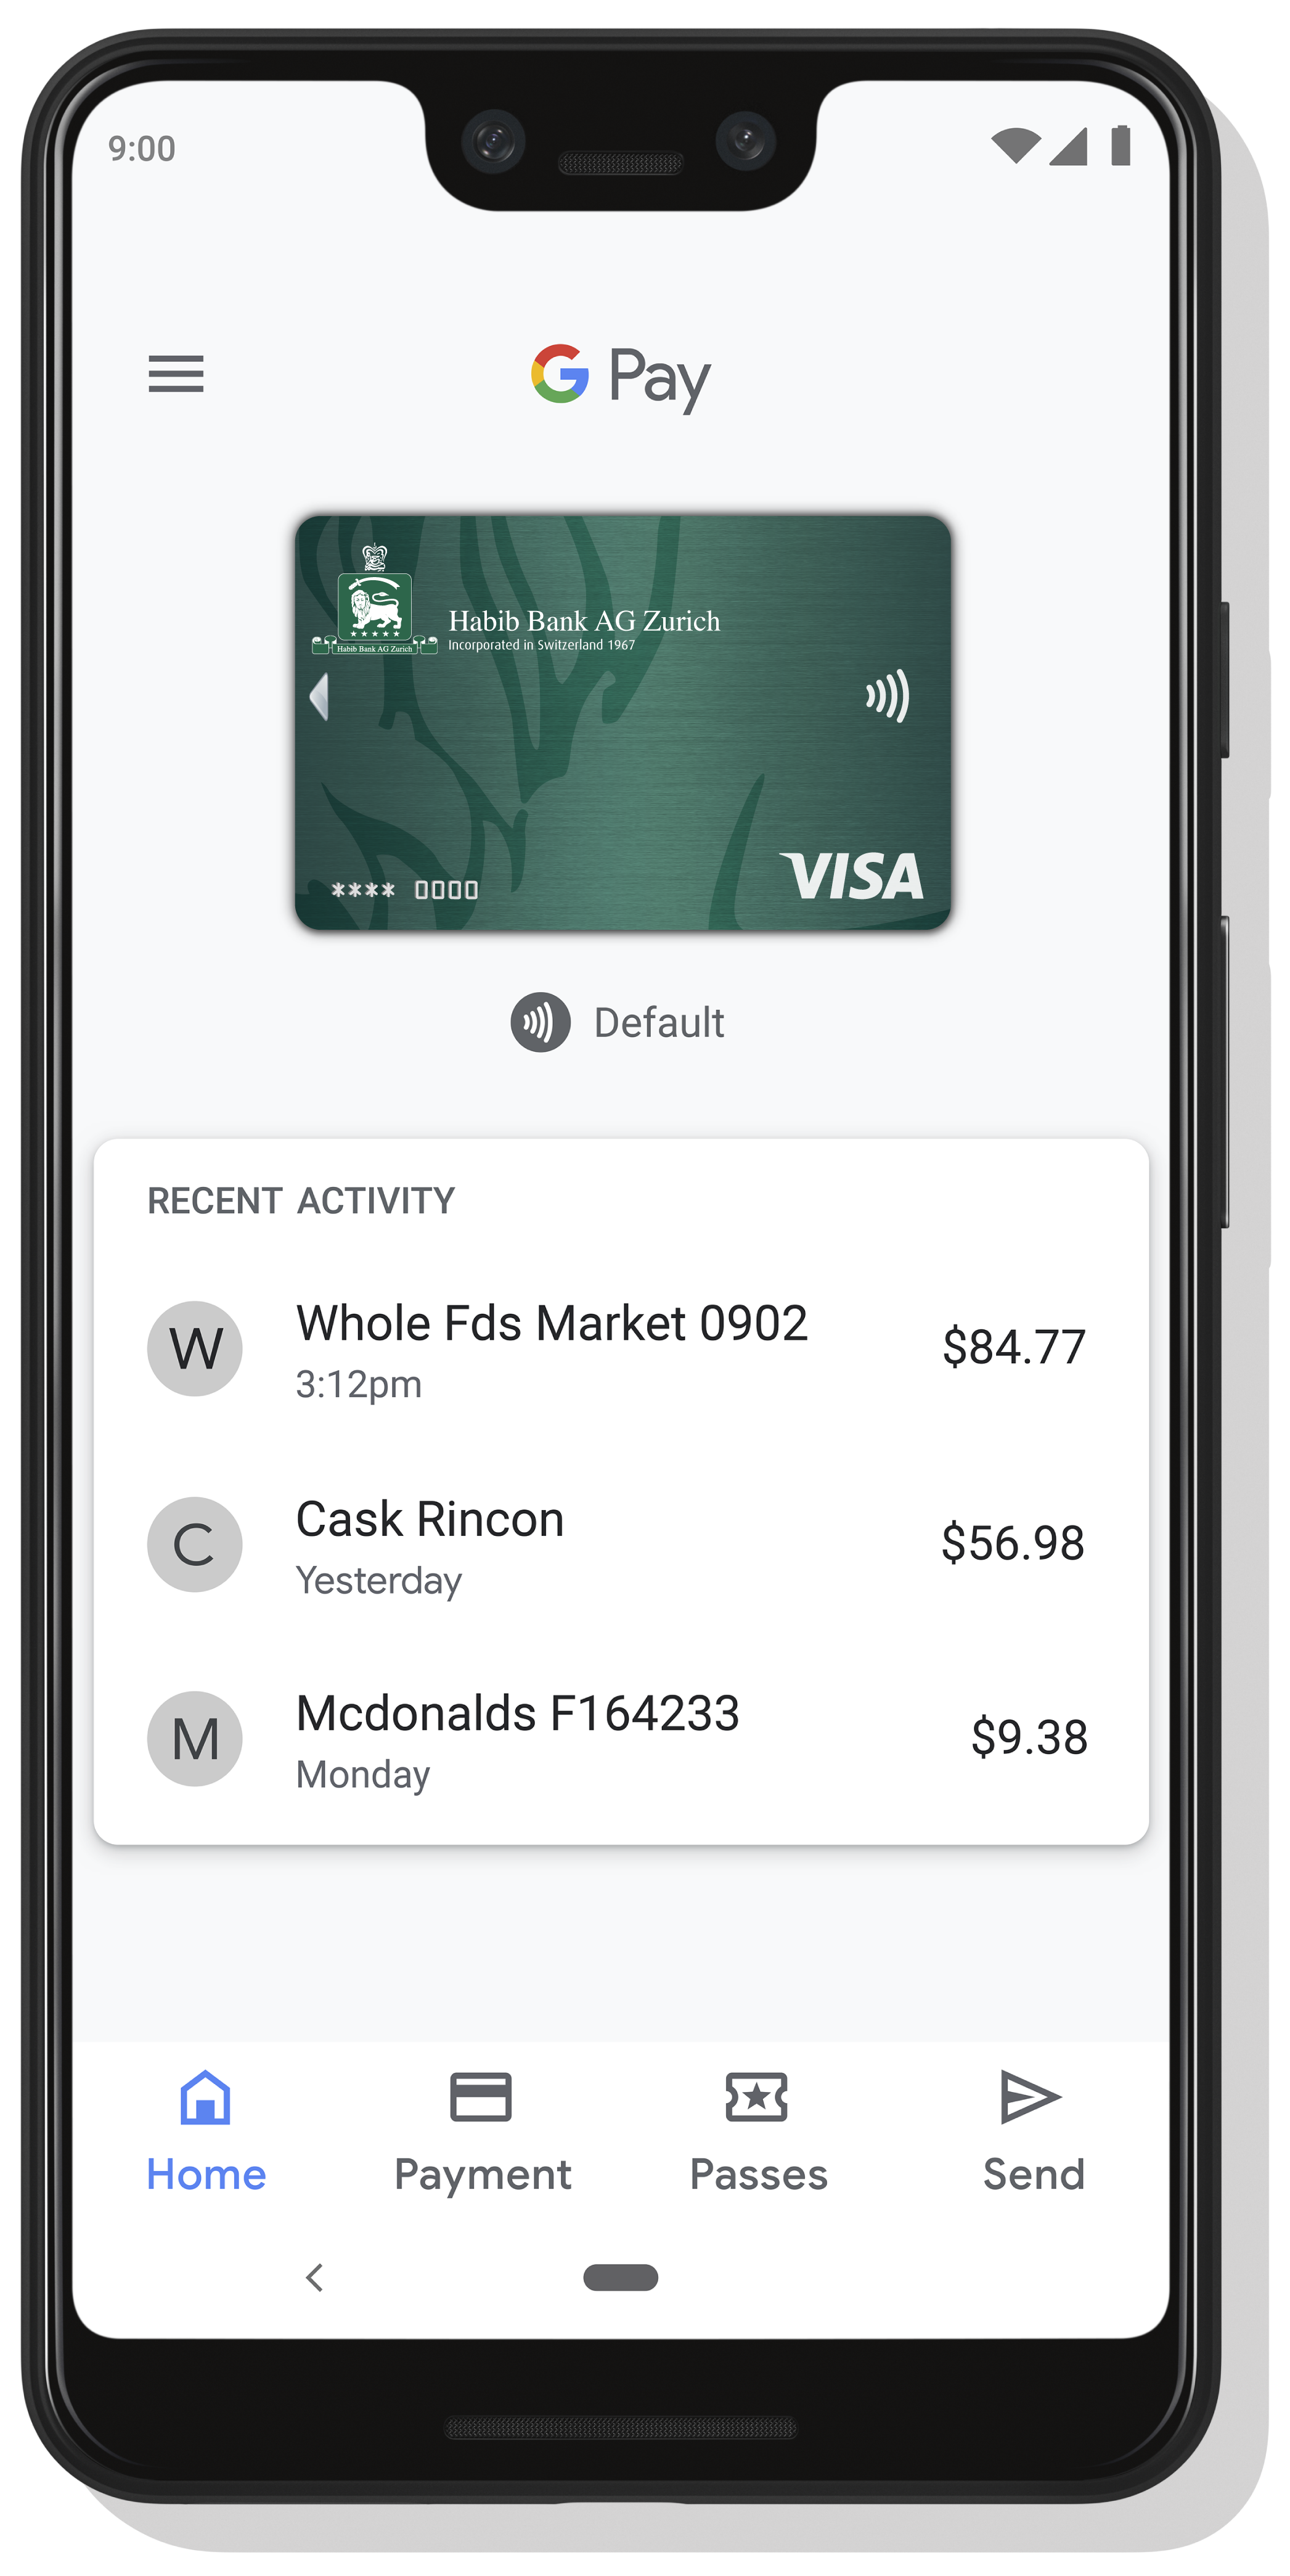 HBZ Card - Google Pay